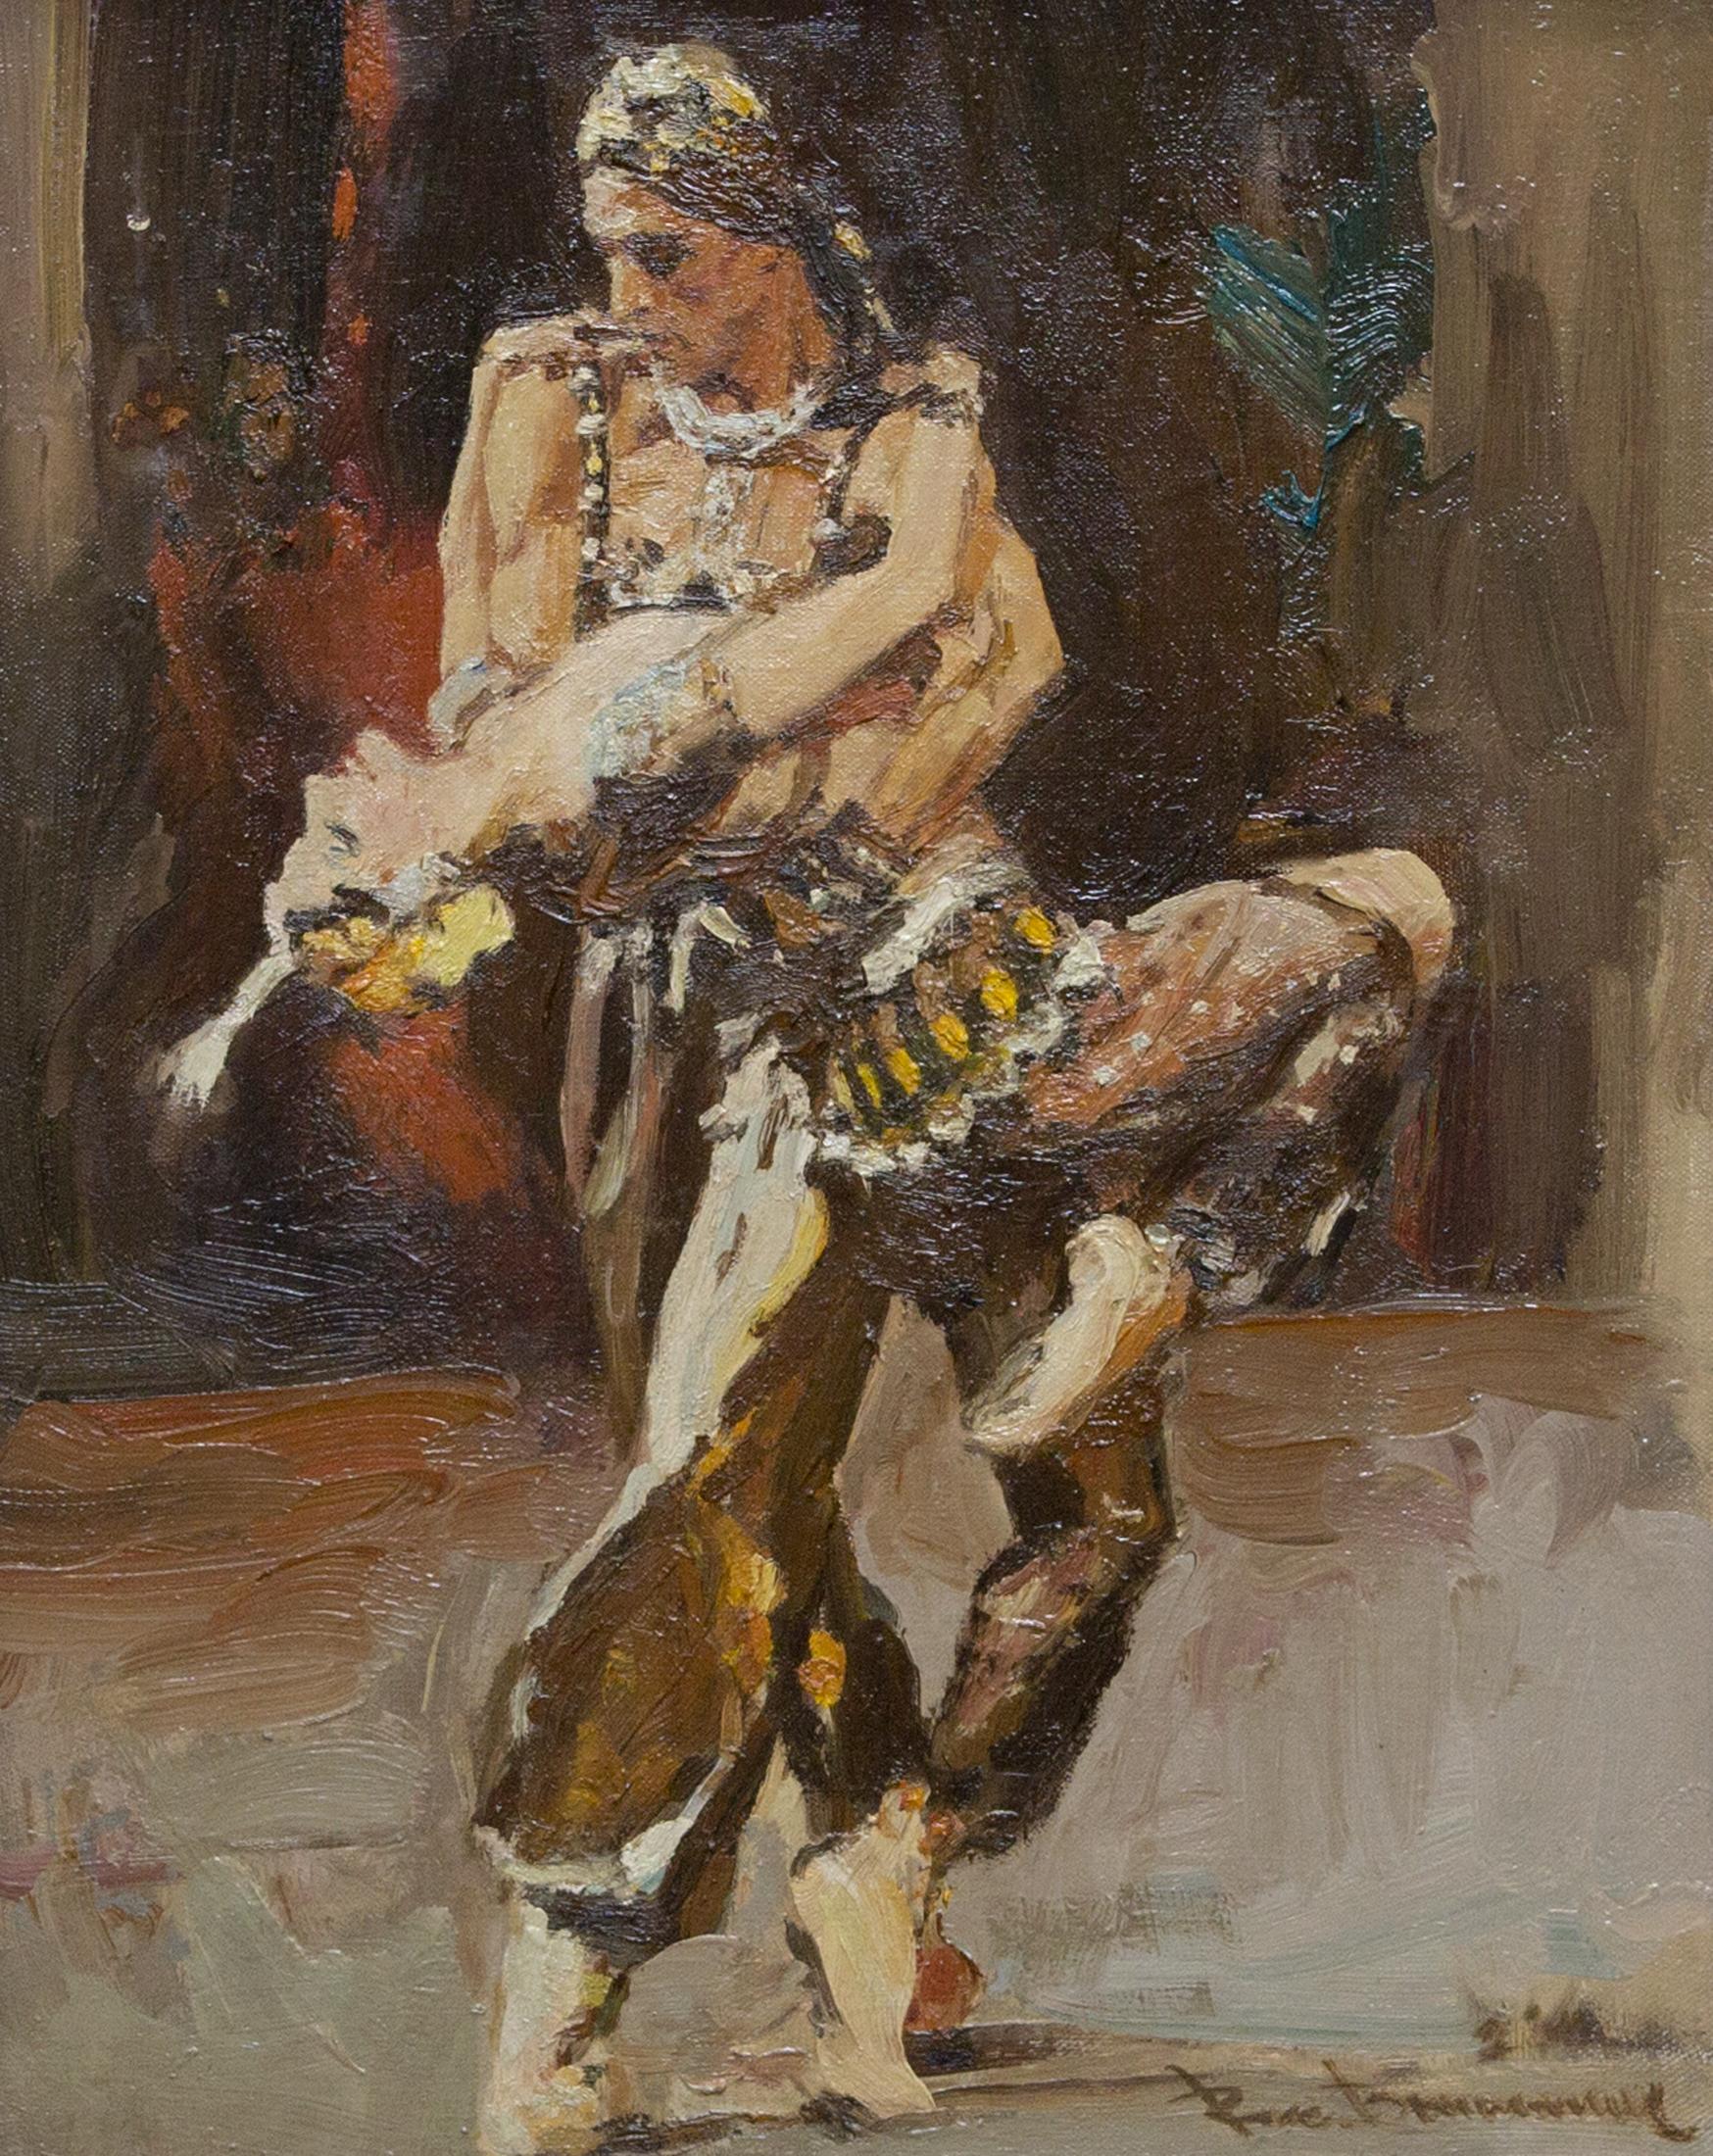 Faruk Ruzimatov and Ulyana Lopatkina in the dance Shaherezada. Original modern art painting